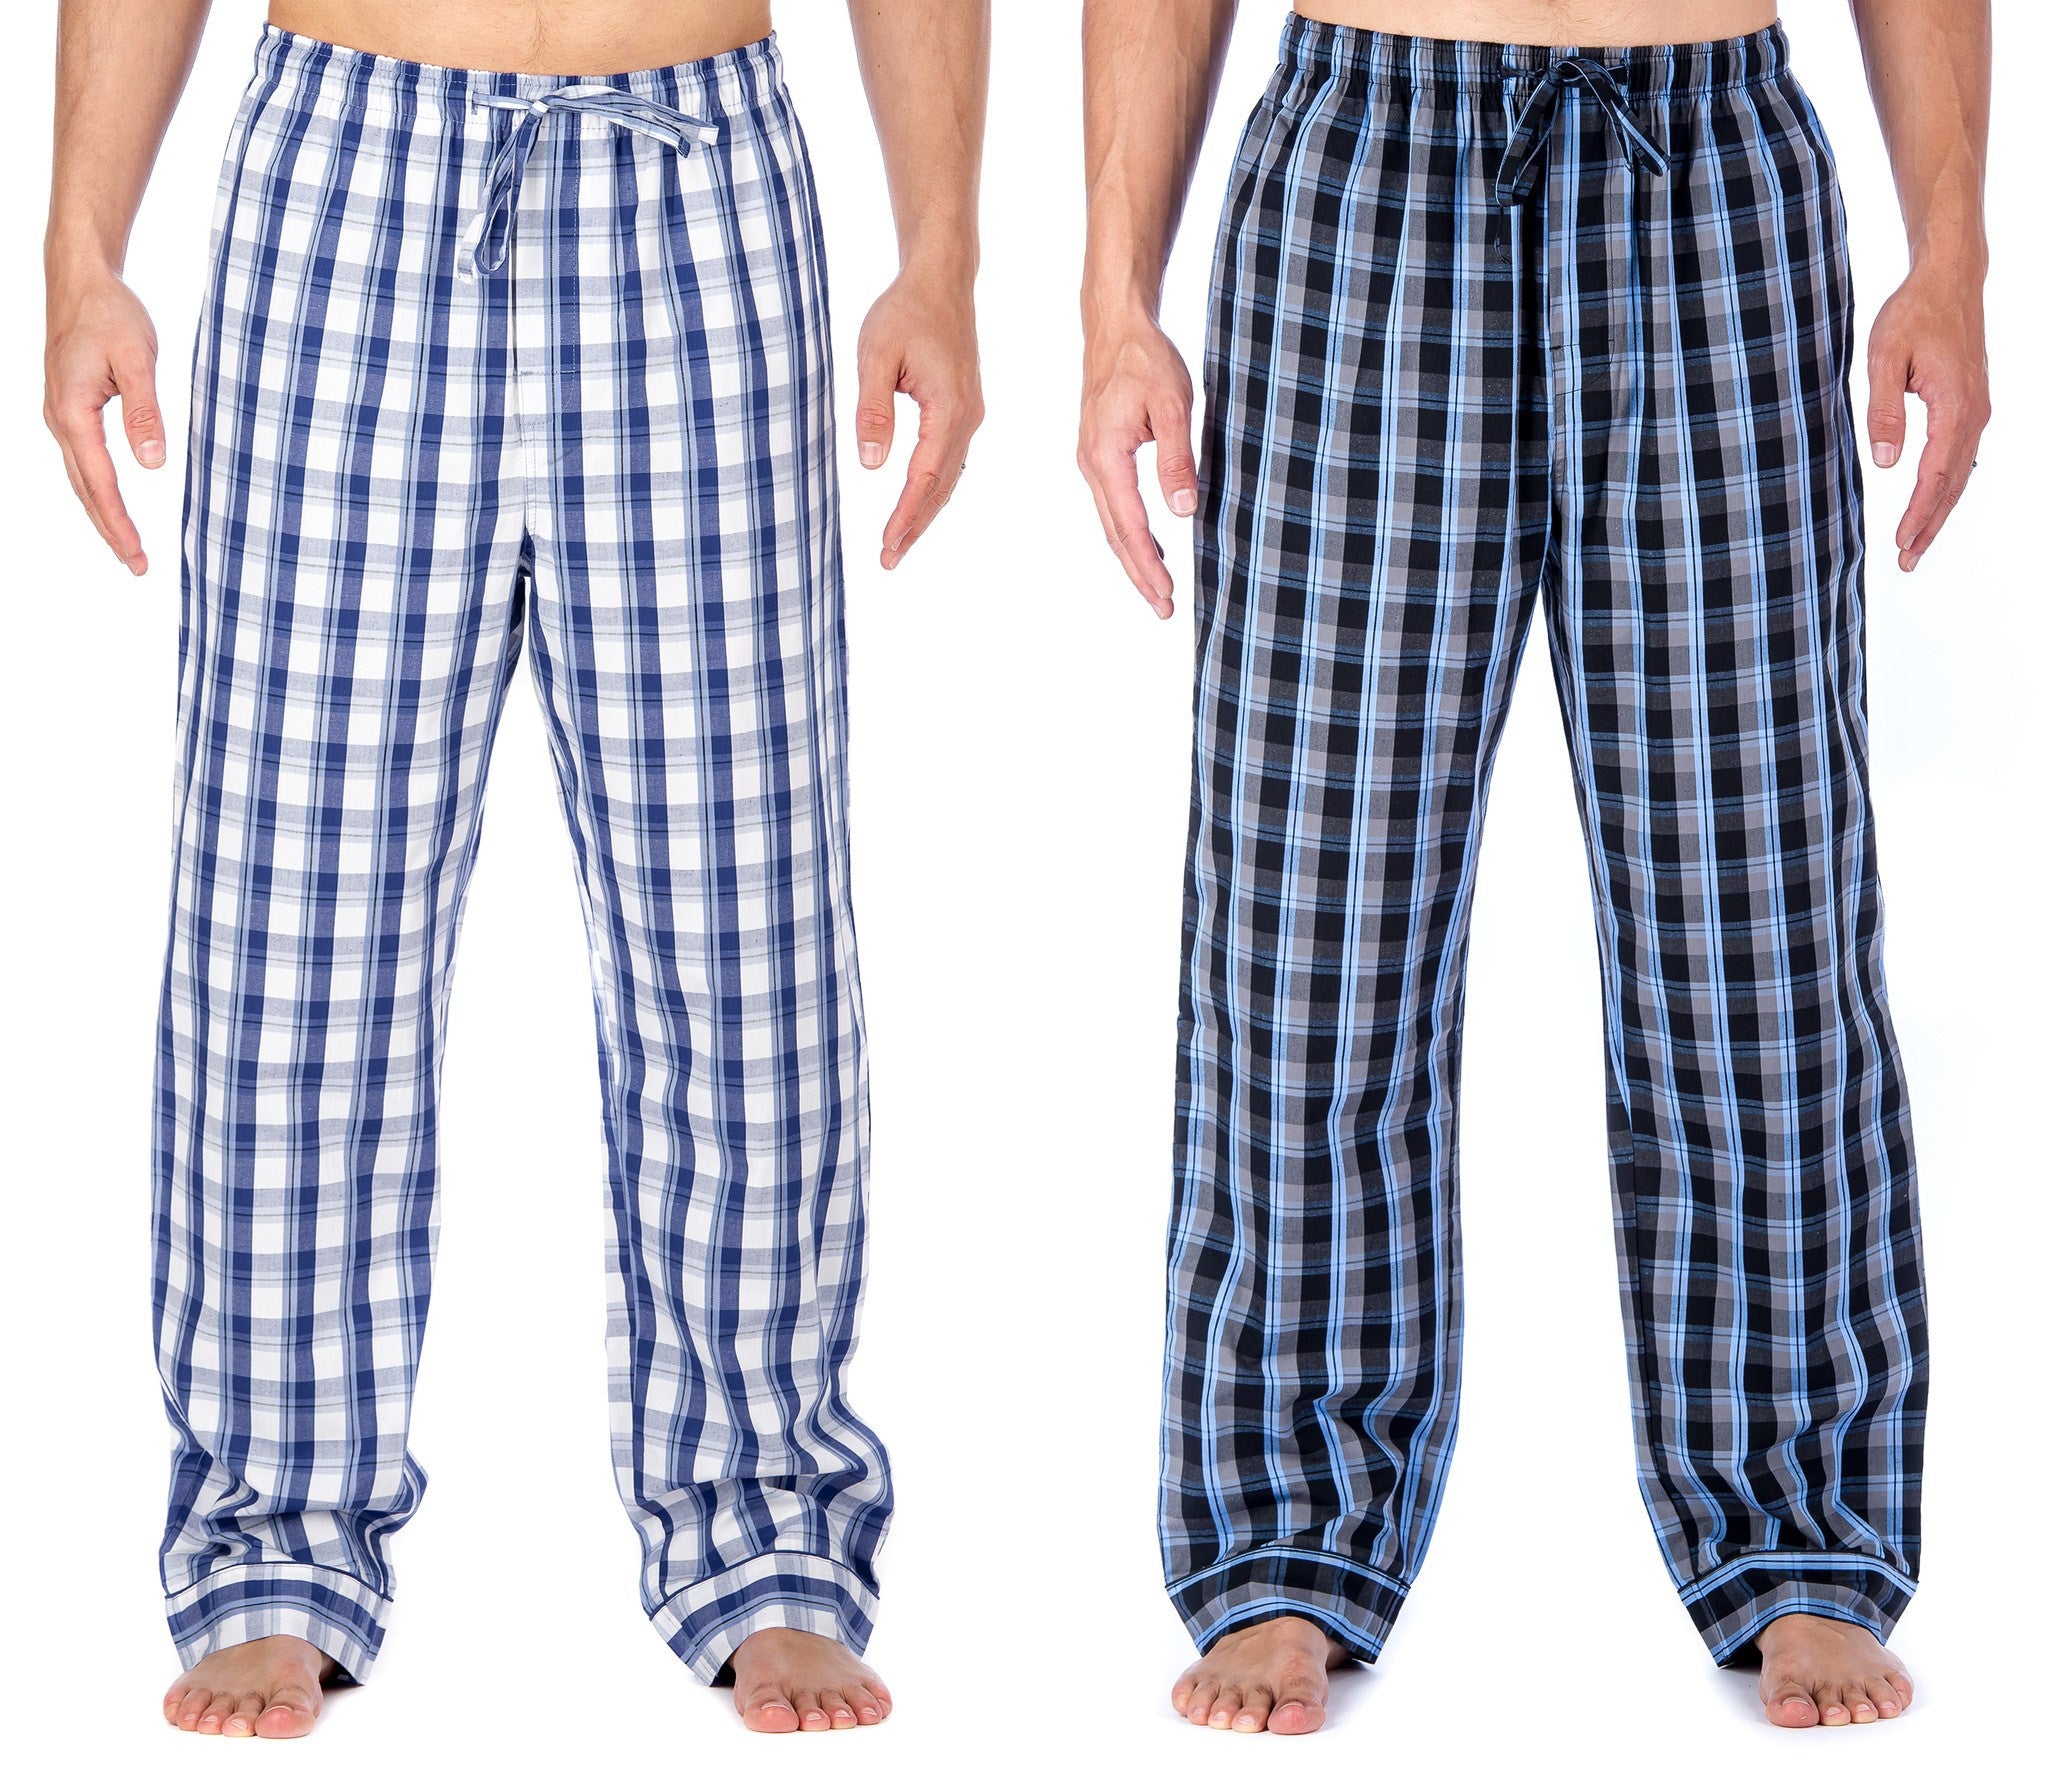 Men's Premium Cotton Lounge/Sleep Pants - 2 Pack